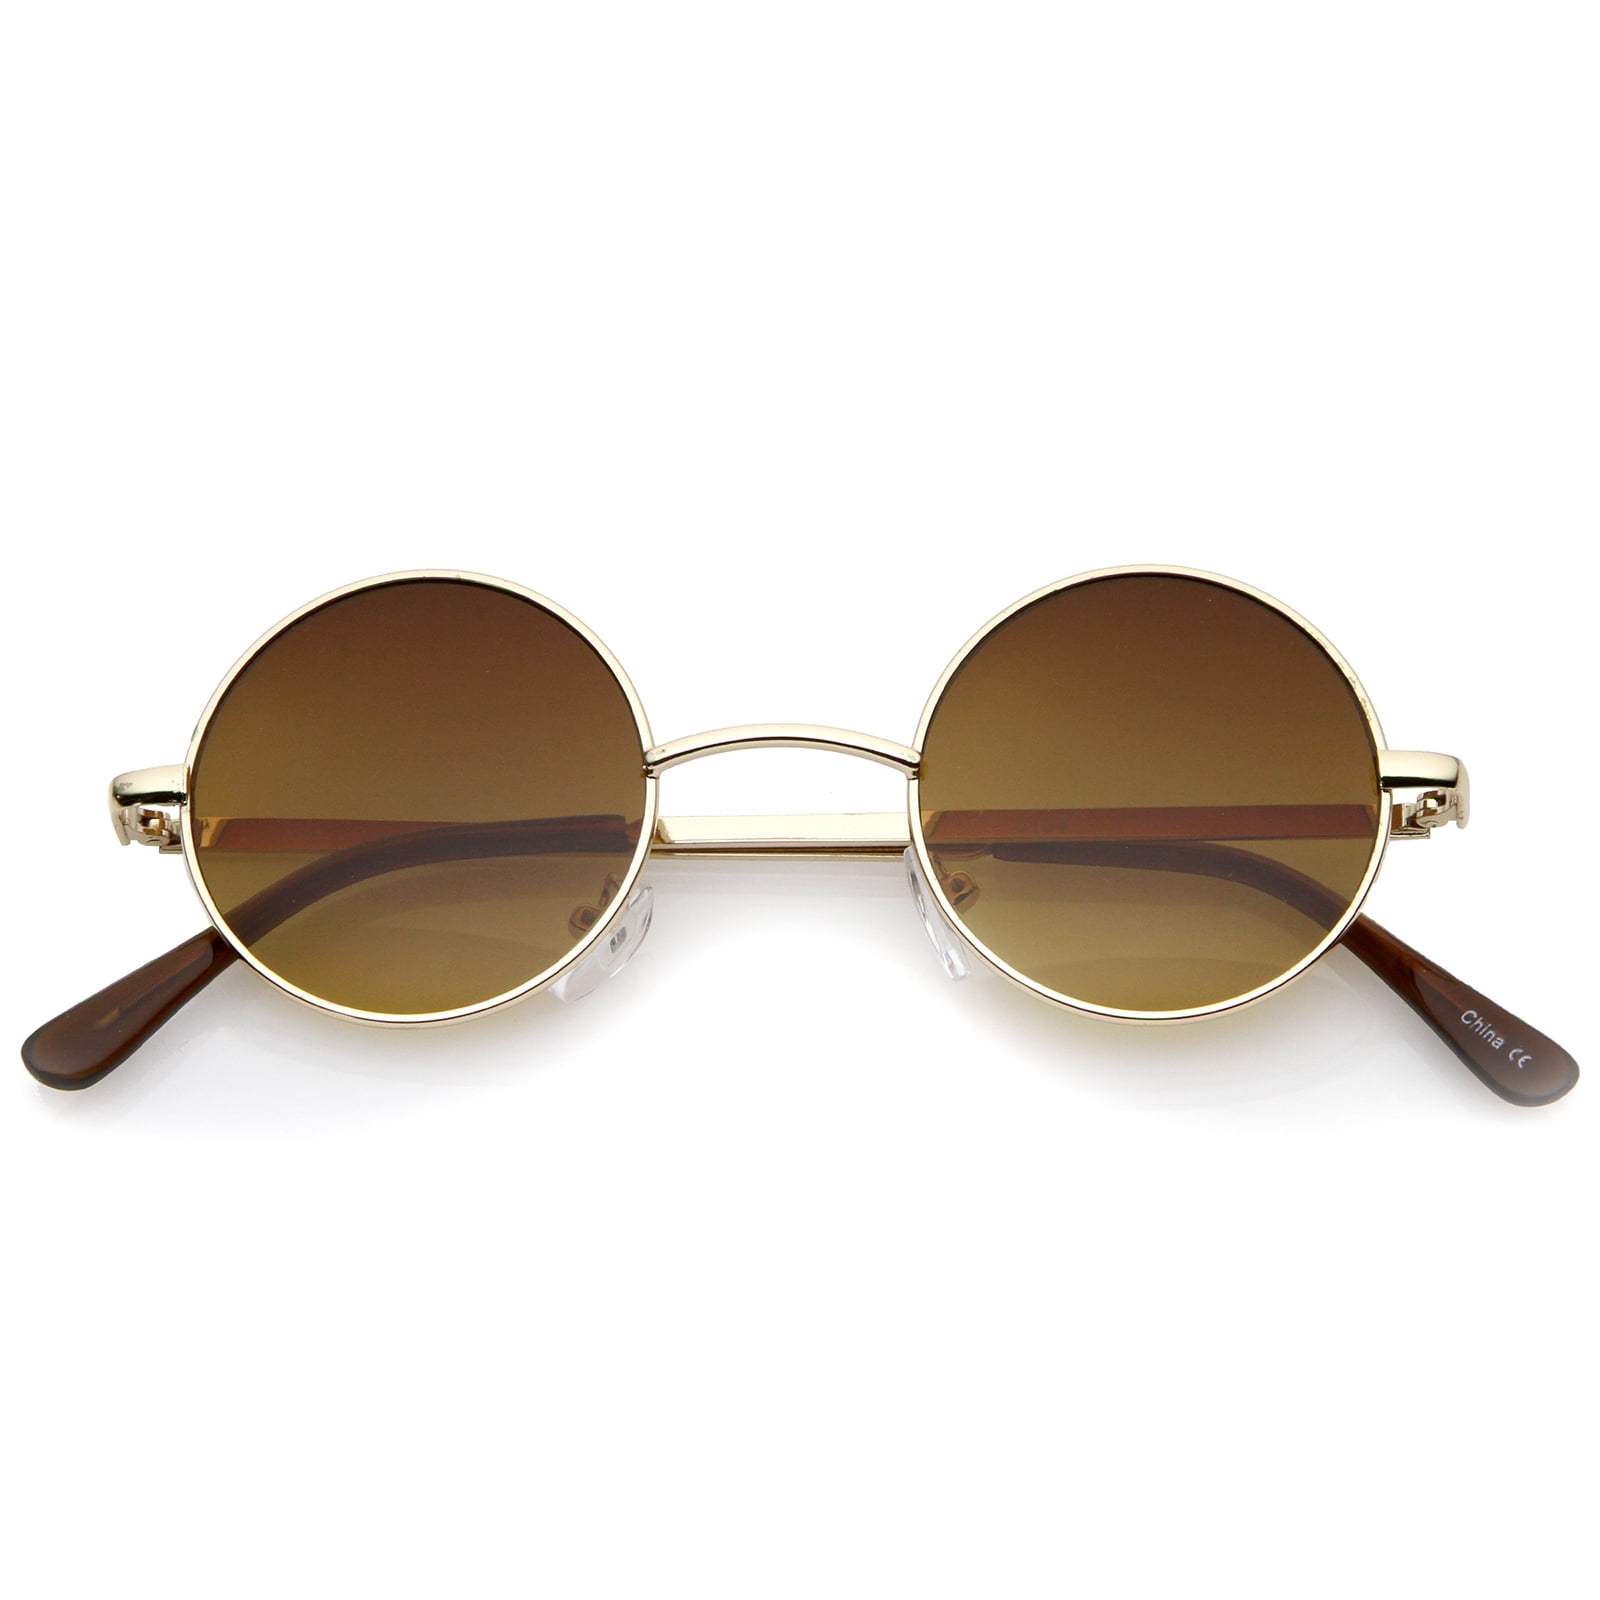 John Lennon Sunglasses Round Hippie Shades Retro Smoked Lenses Gold Metal 